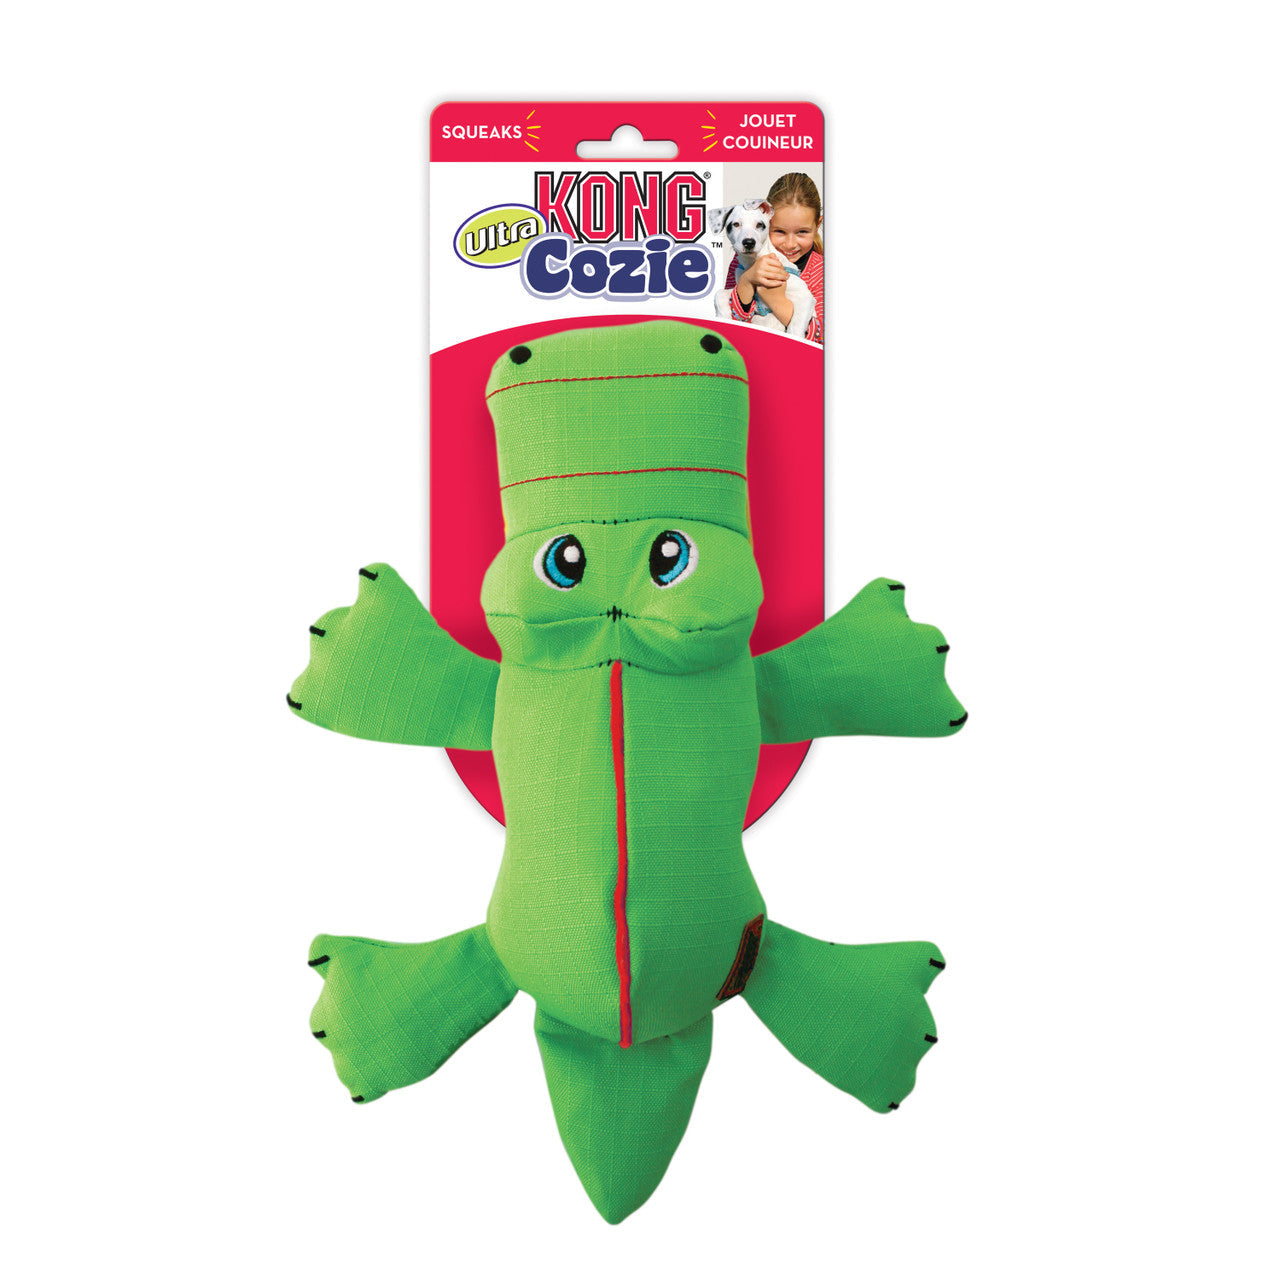 KONG Cozie Ultra Ana Alligator Dog Toy MD